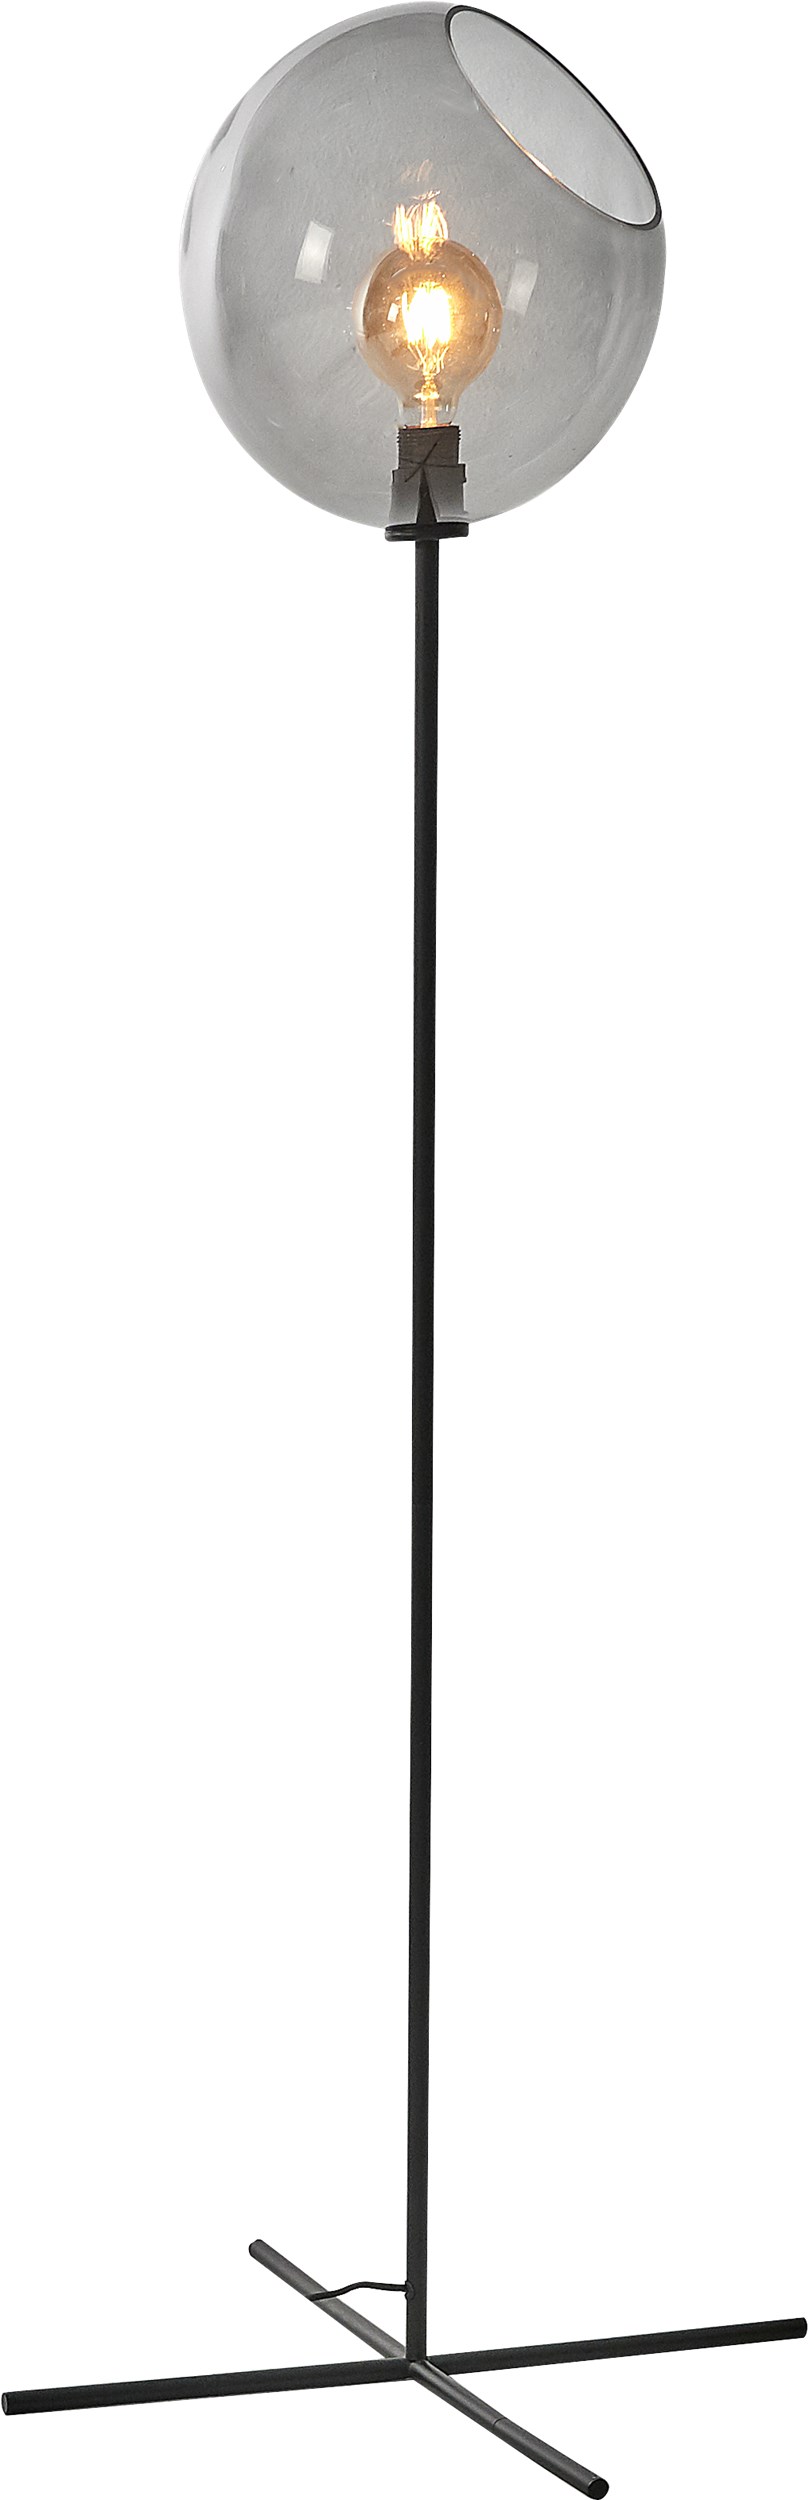 Balance Golvlampa 155 x 30 cm - 1 rökfärgad glasskärm, mattsvart metallstomme/bas och svart textilsladd